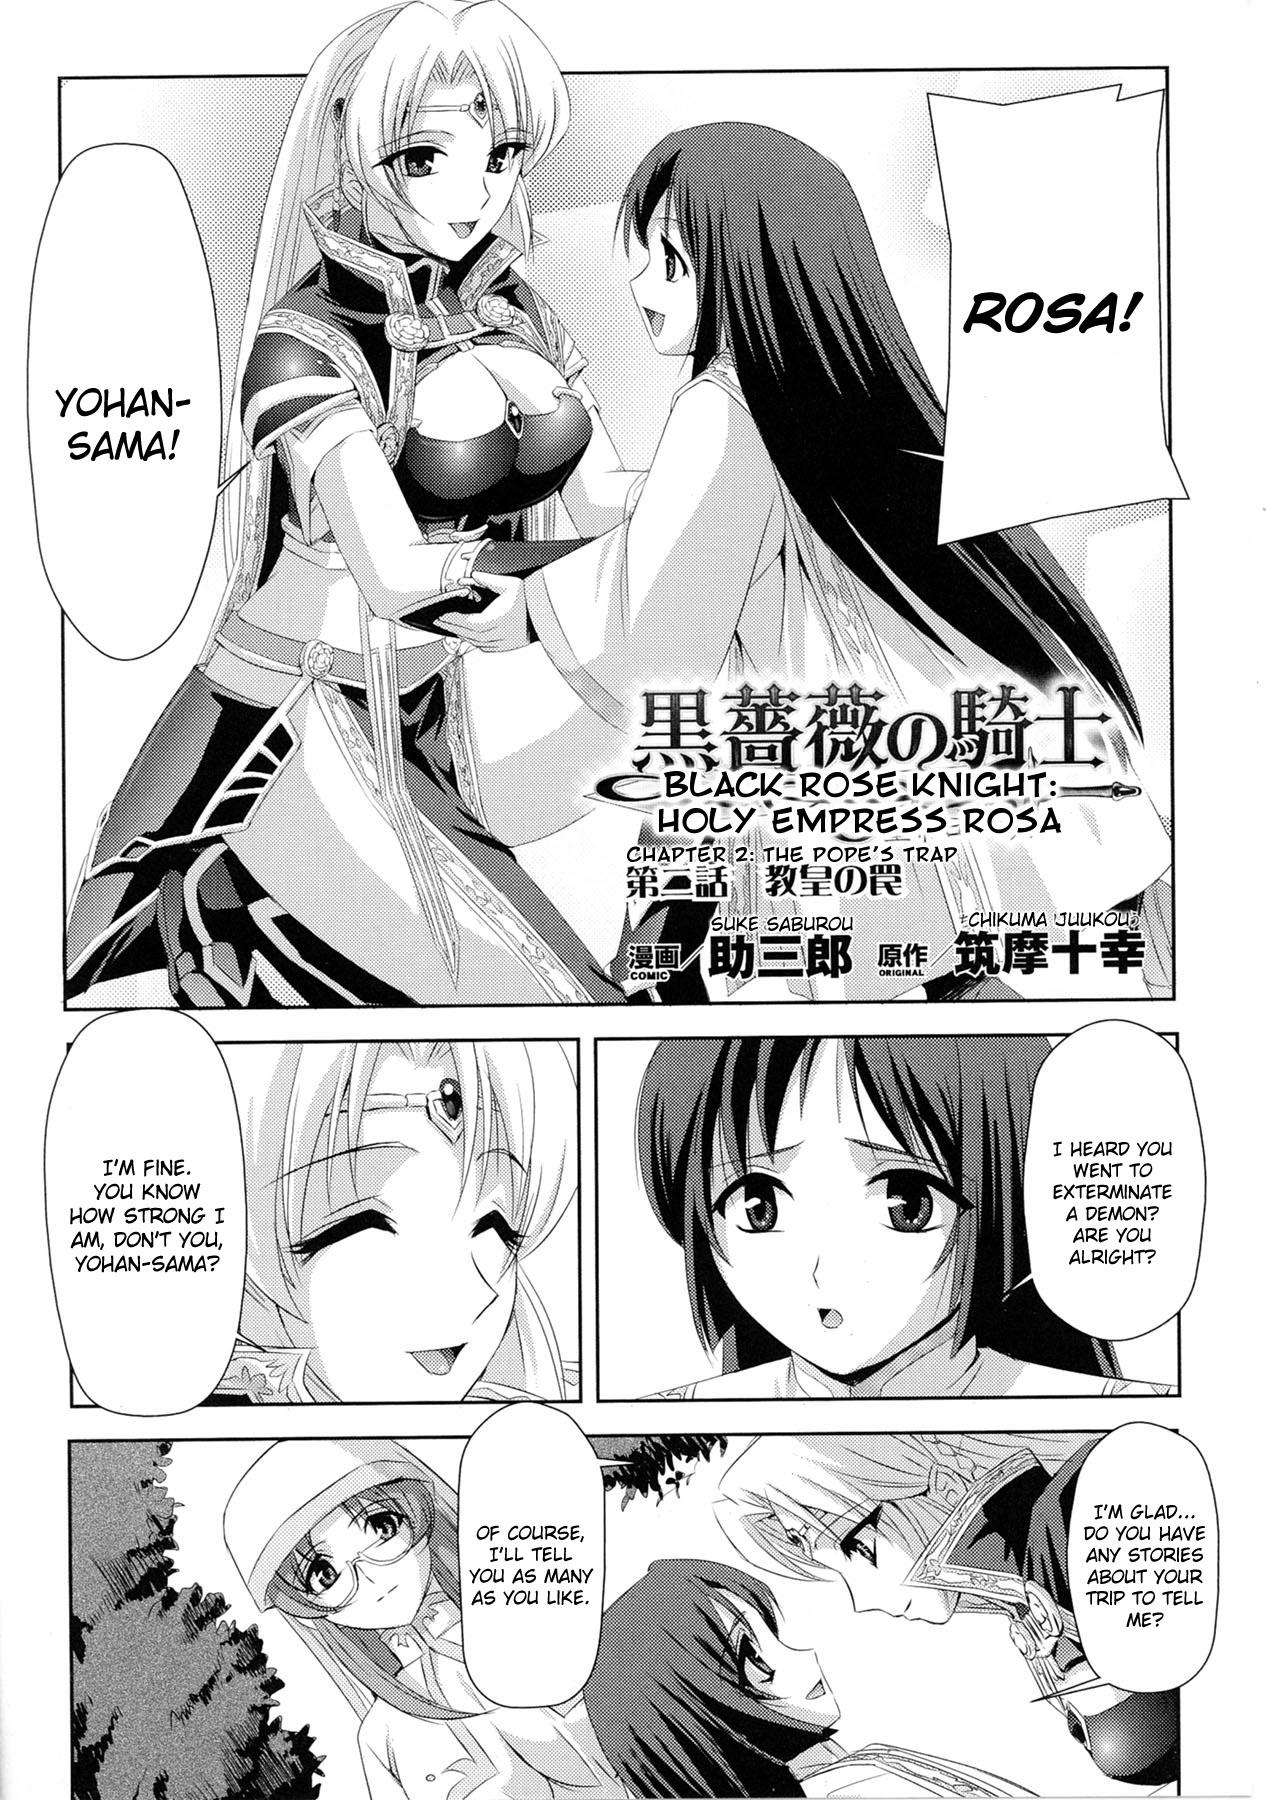 [Josansou] Black Rose Knight - Holy Empress Rosa Ch. 01-04 [ENG] 21